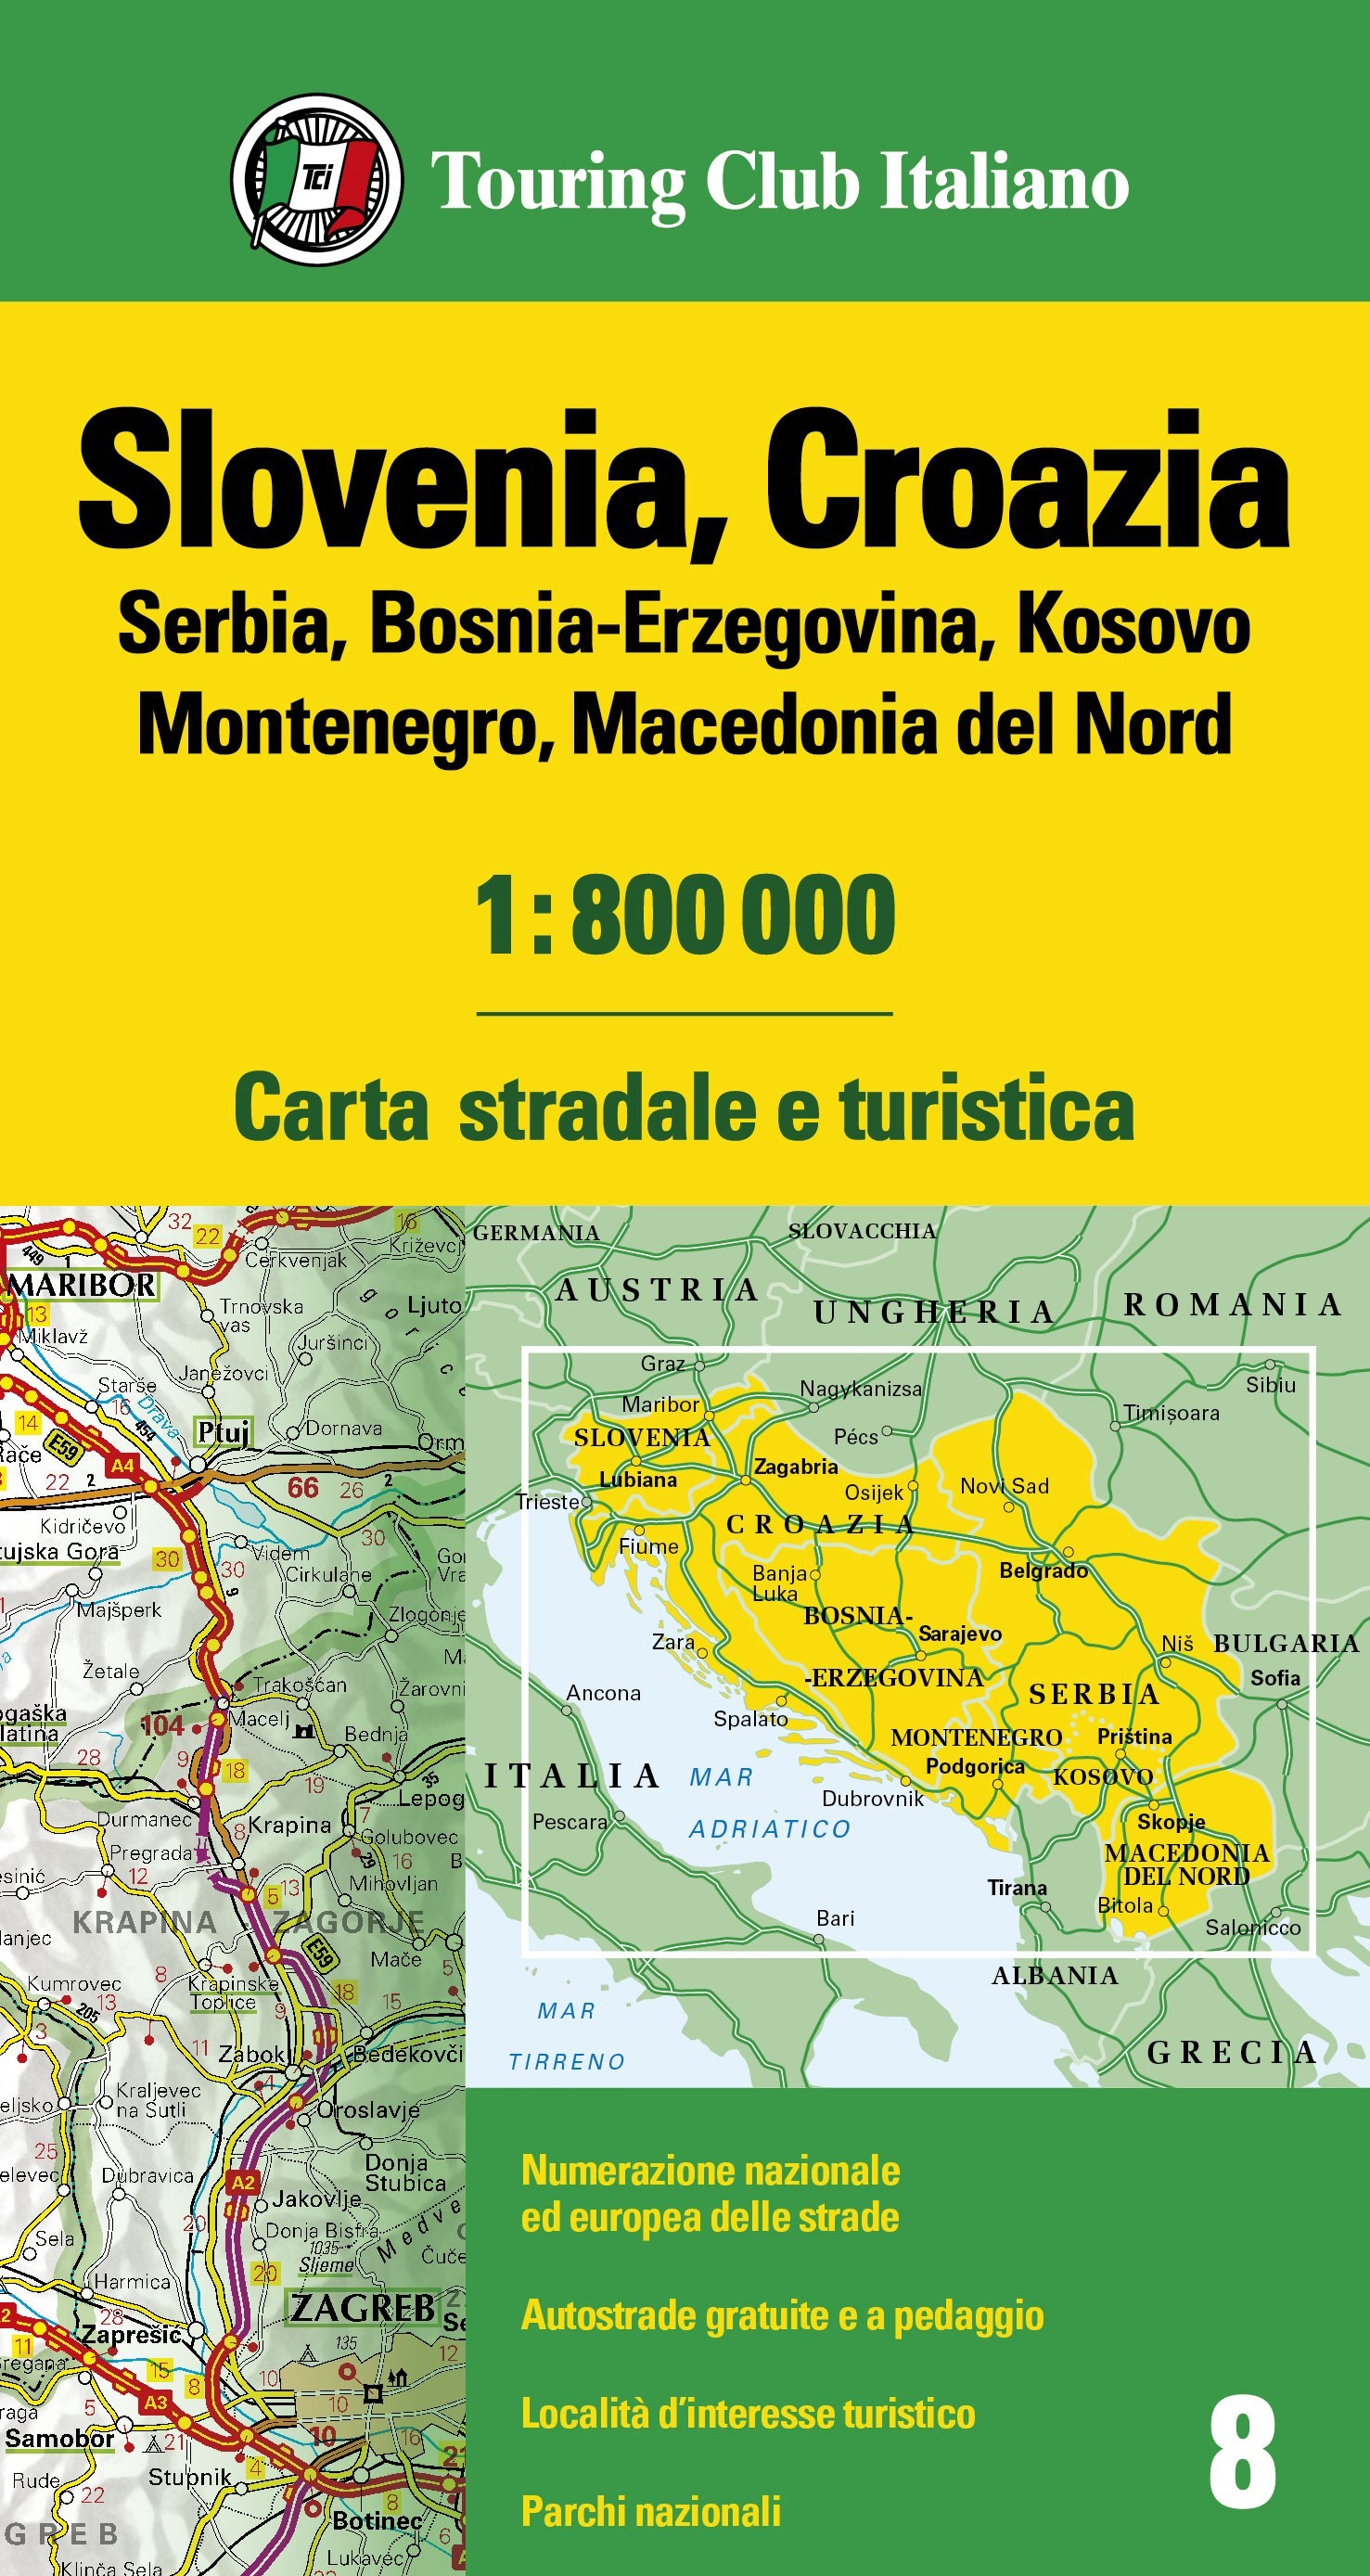 Bosnia Erzegovina Carte d'Europa 1:800.000 multilingue Serbia Montenegro Macedonia 1:800.000 Slovenia Carta stradale e turistica Ediz Croazia 